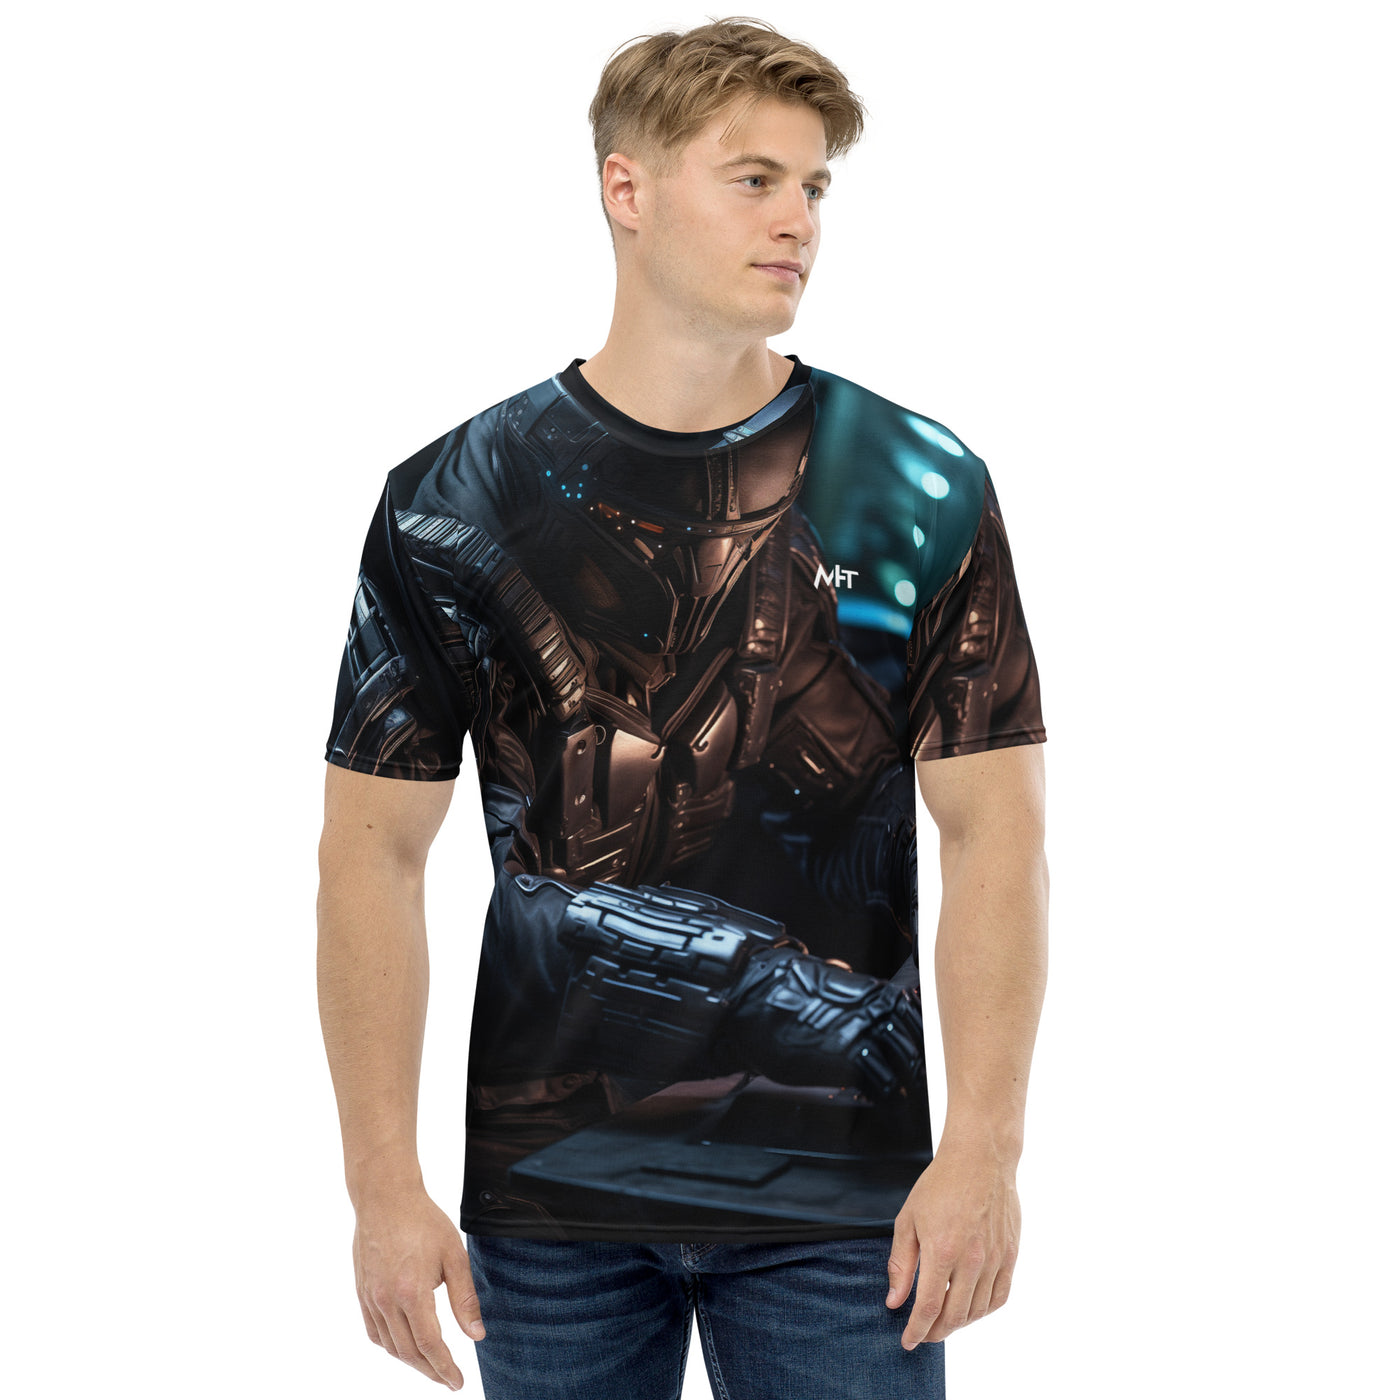 CyberArms Warrior v24 - Men's t-shirt